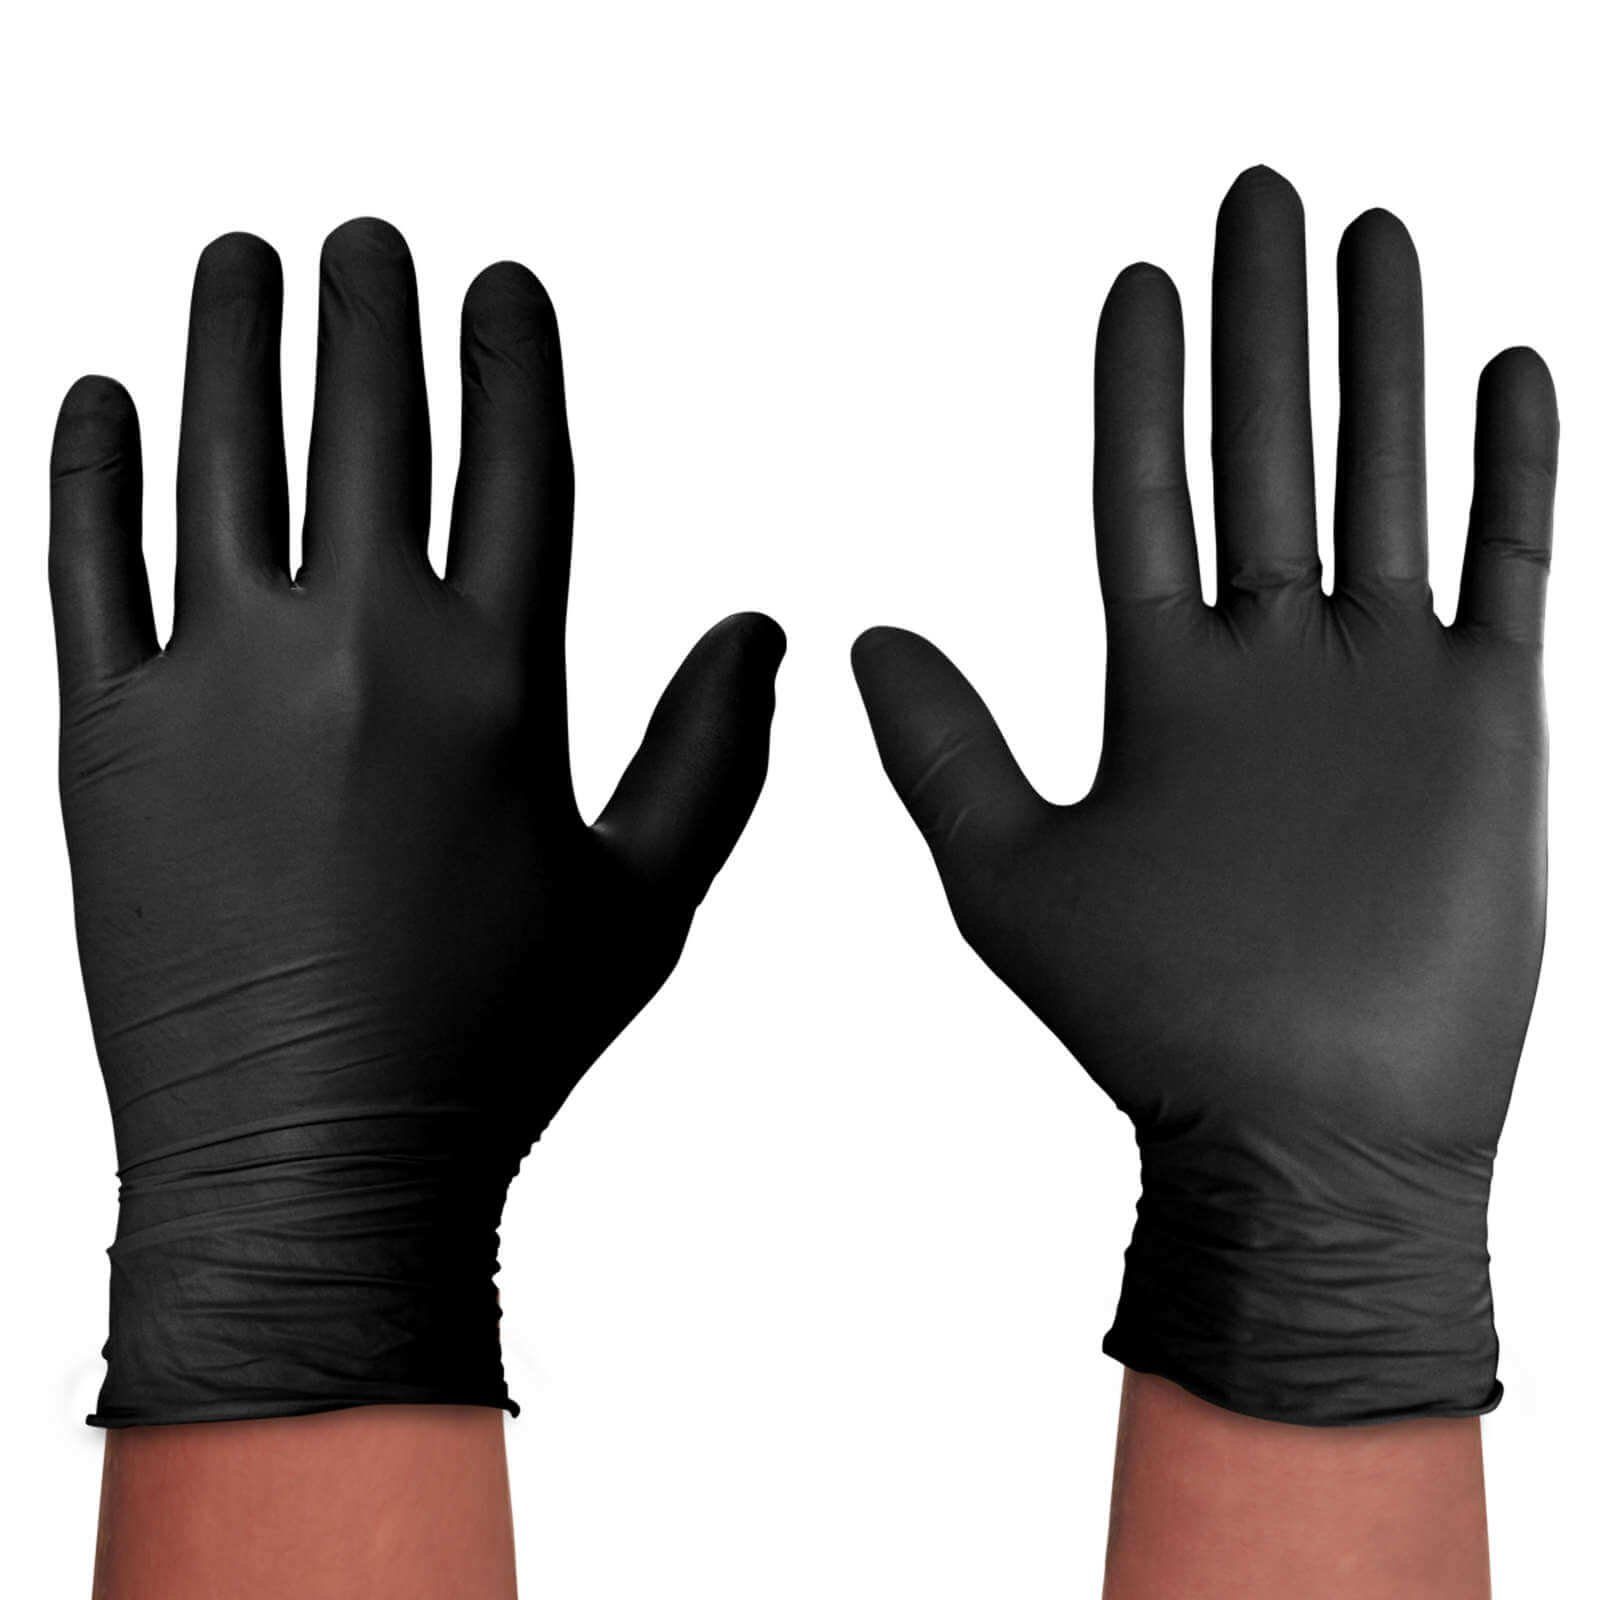 Black puderfrei SPONTEX Einweghandschuhe Nitrilhandschuh, (Spar-Set) Protect, Spontex Einmalhandschuhe